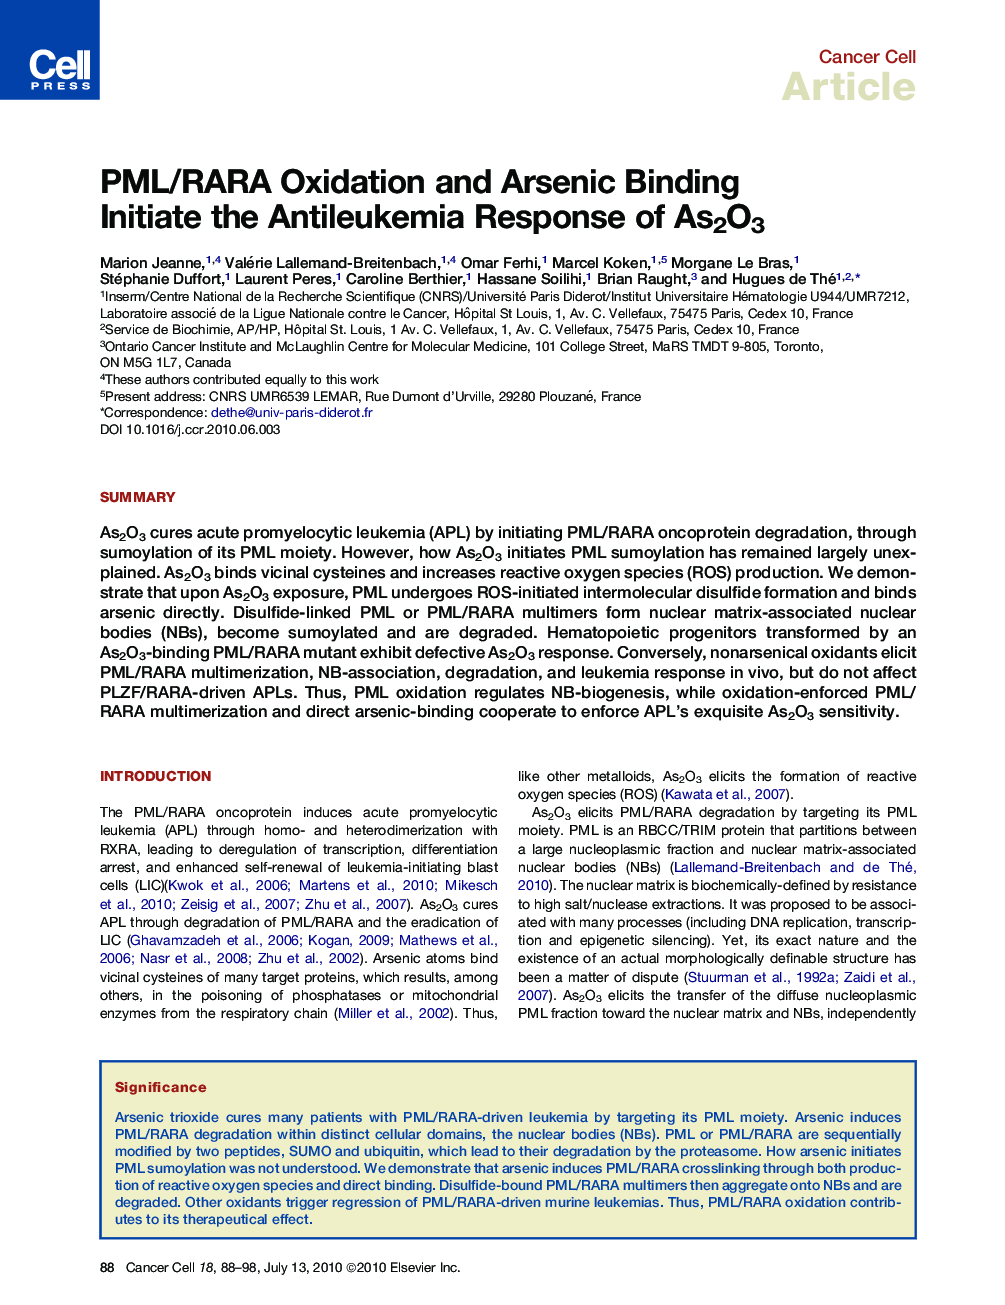 PML/RARA Oxidation and Arsenic Binding Initiate the Antileukemia Response of As2O3